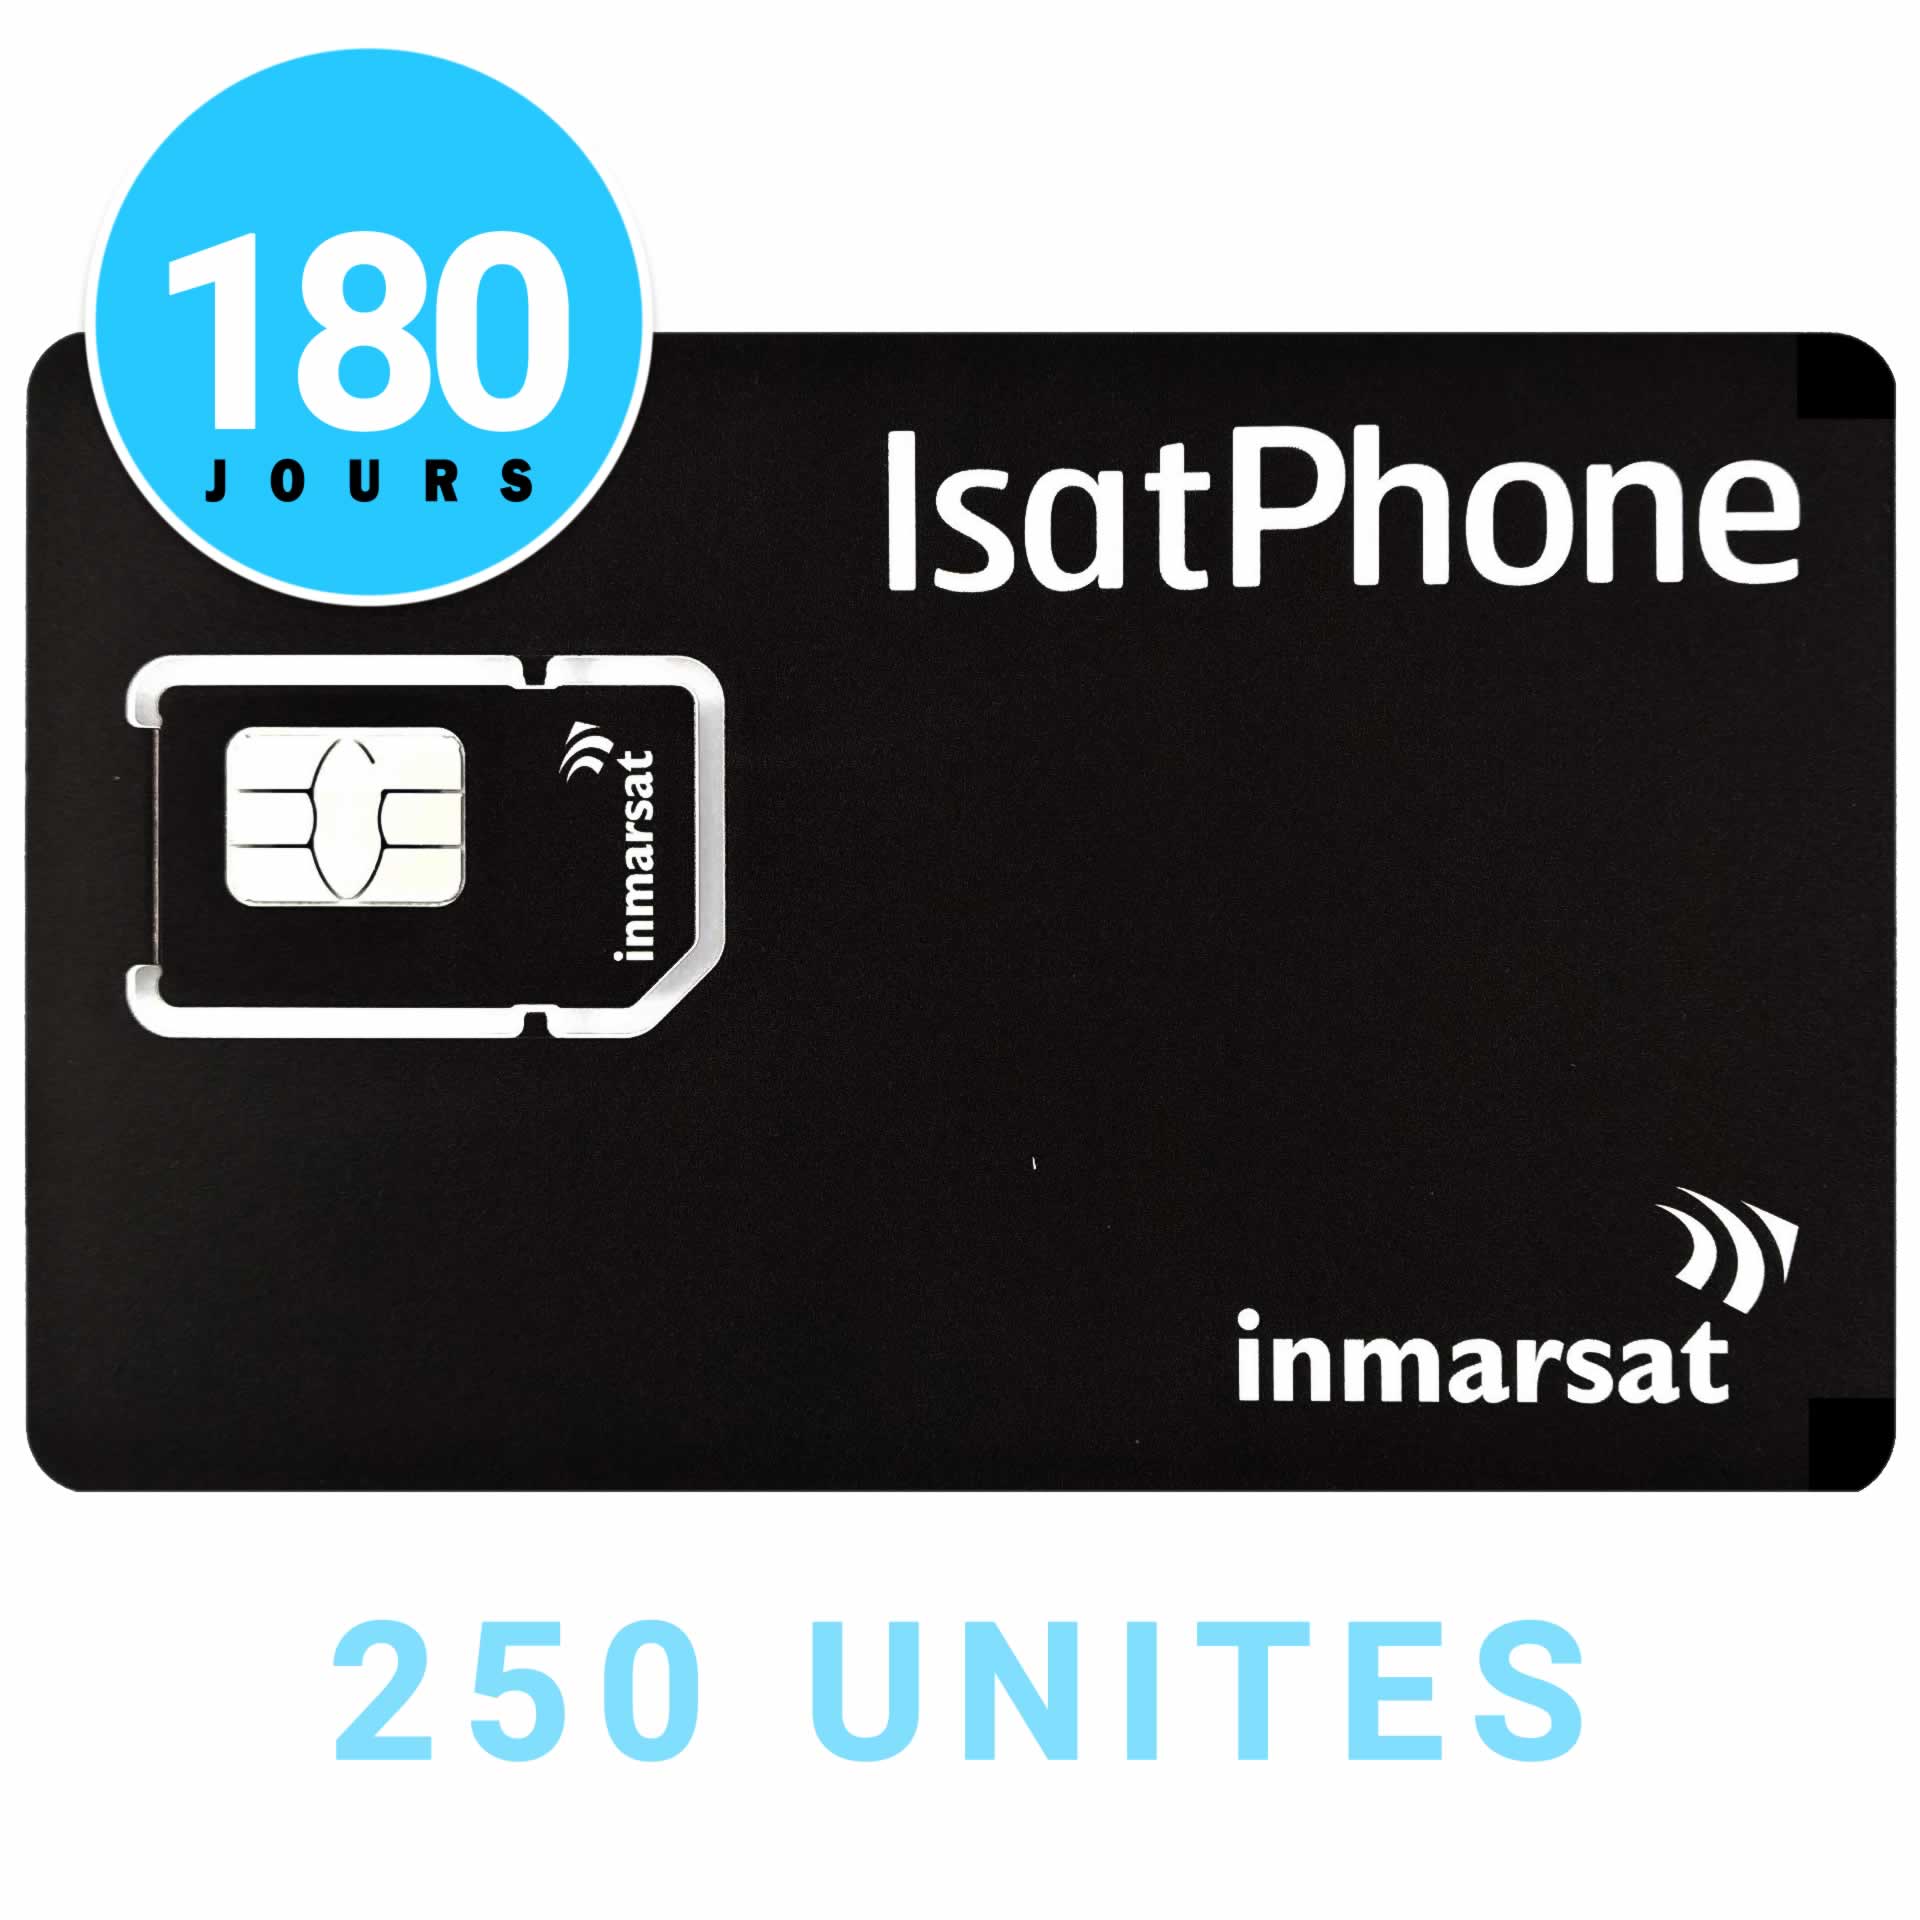 INMARSAT Rechargeable ISATPHONE Prepaid Card - 250 UNITS - 180 DAYS